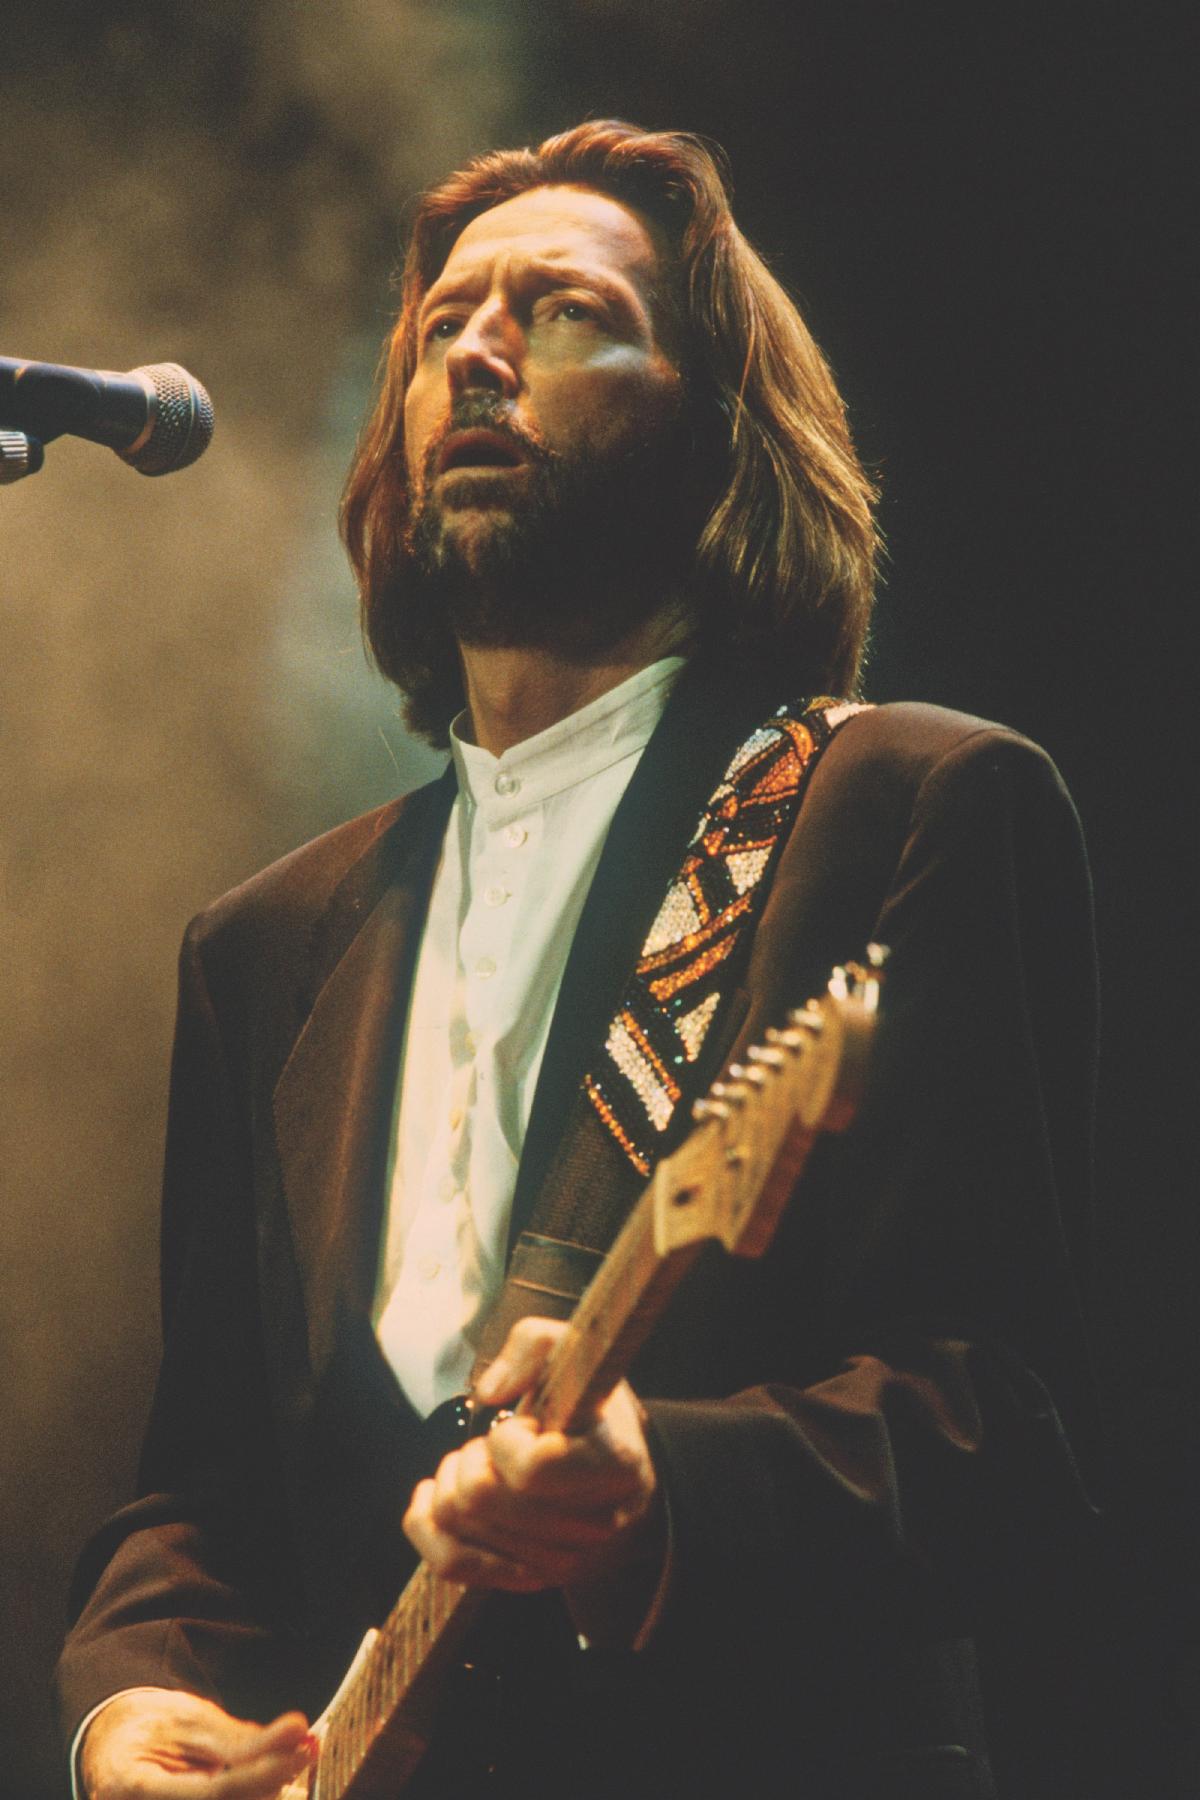 Eric Clapton - Pretending (1989)